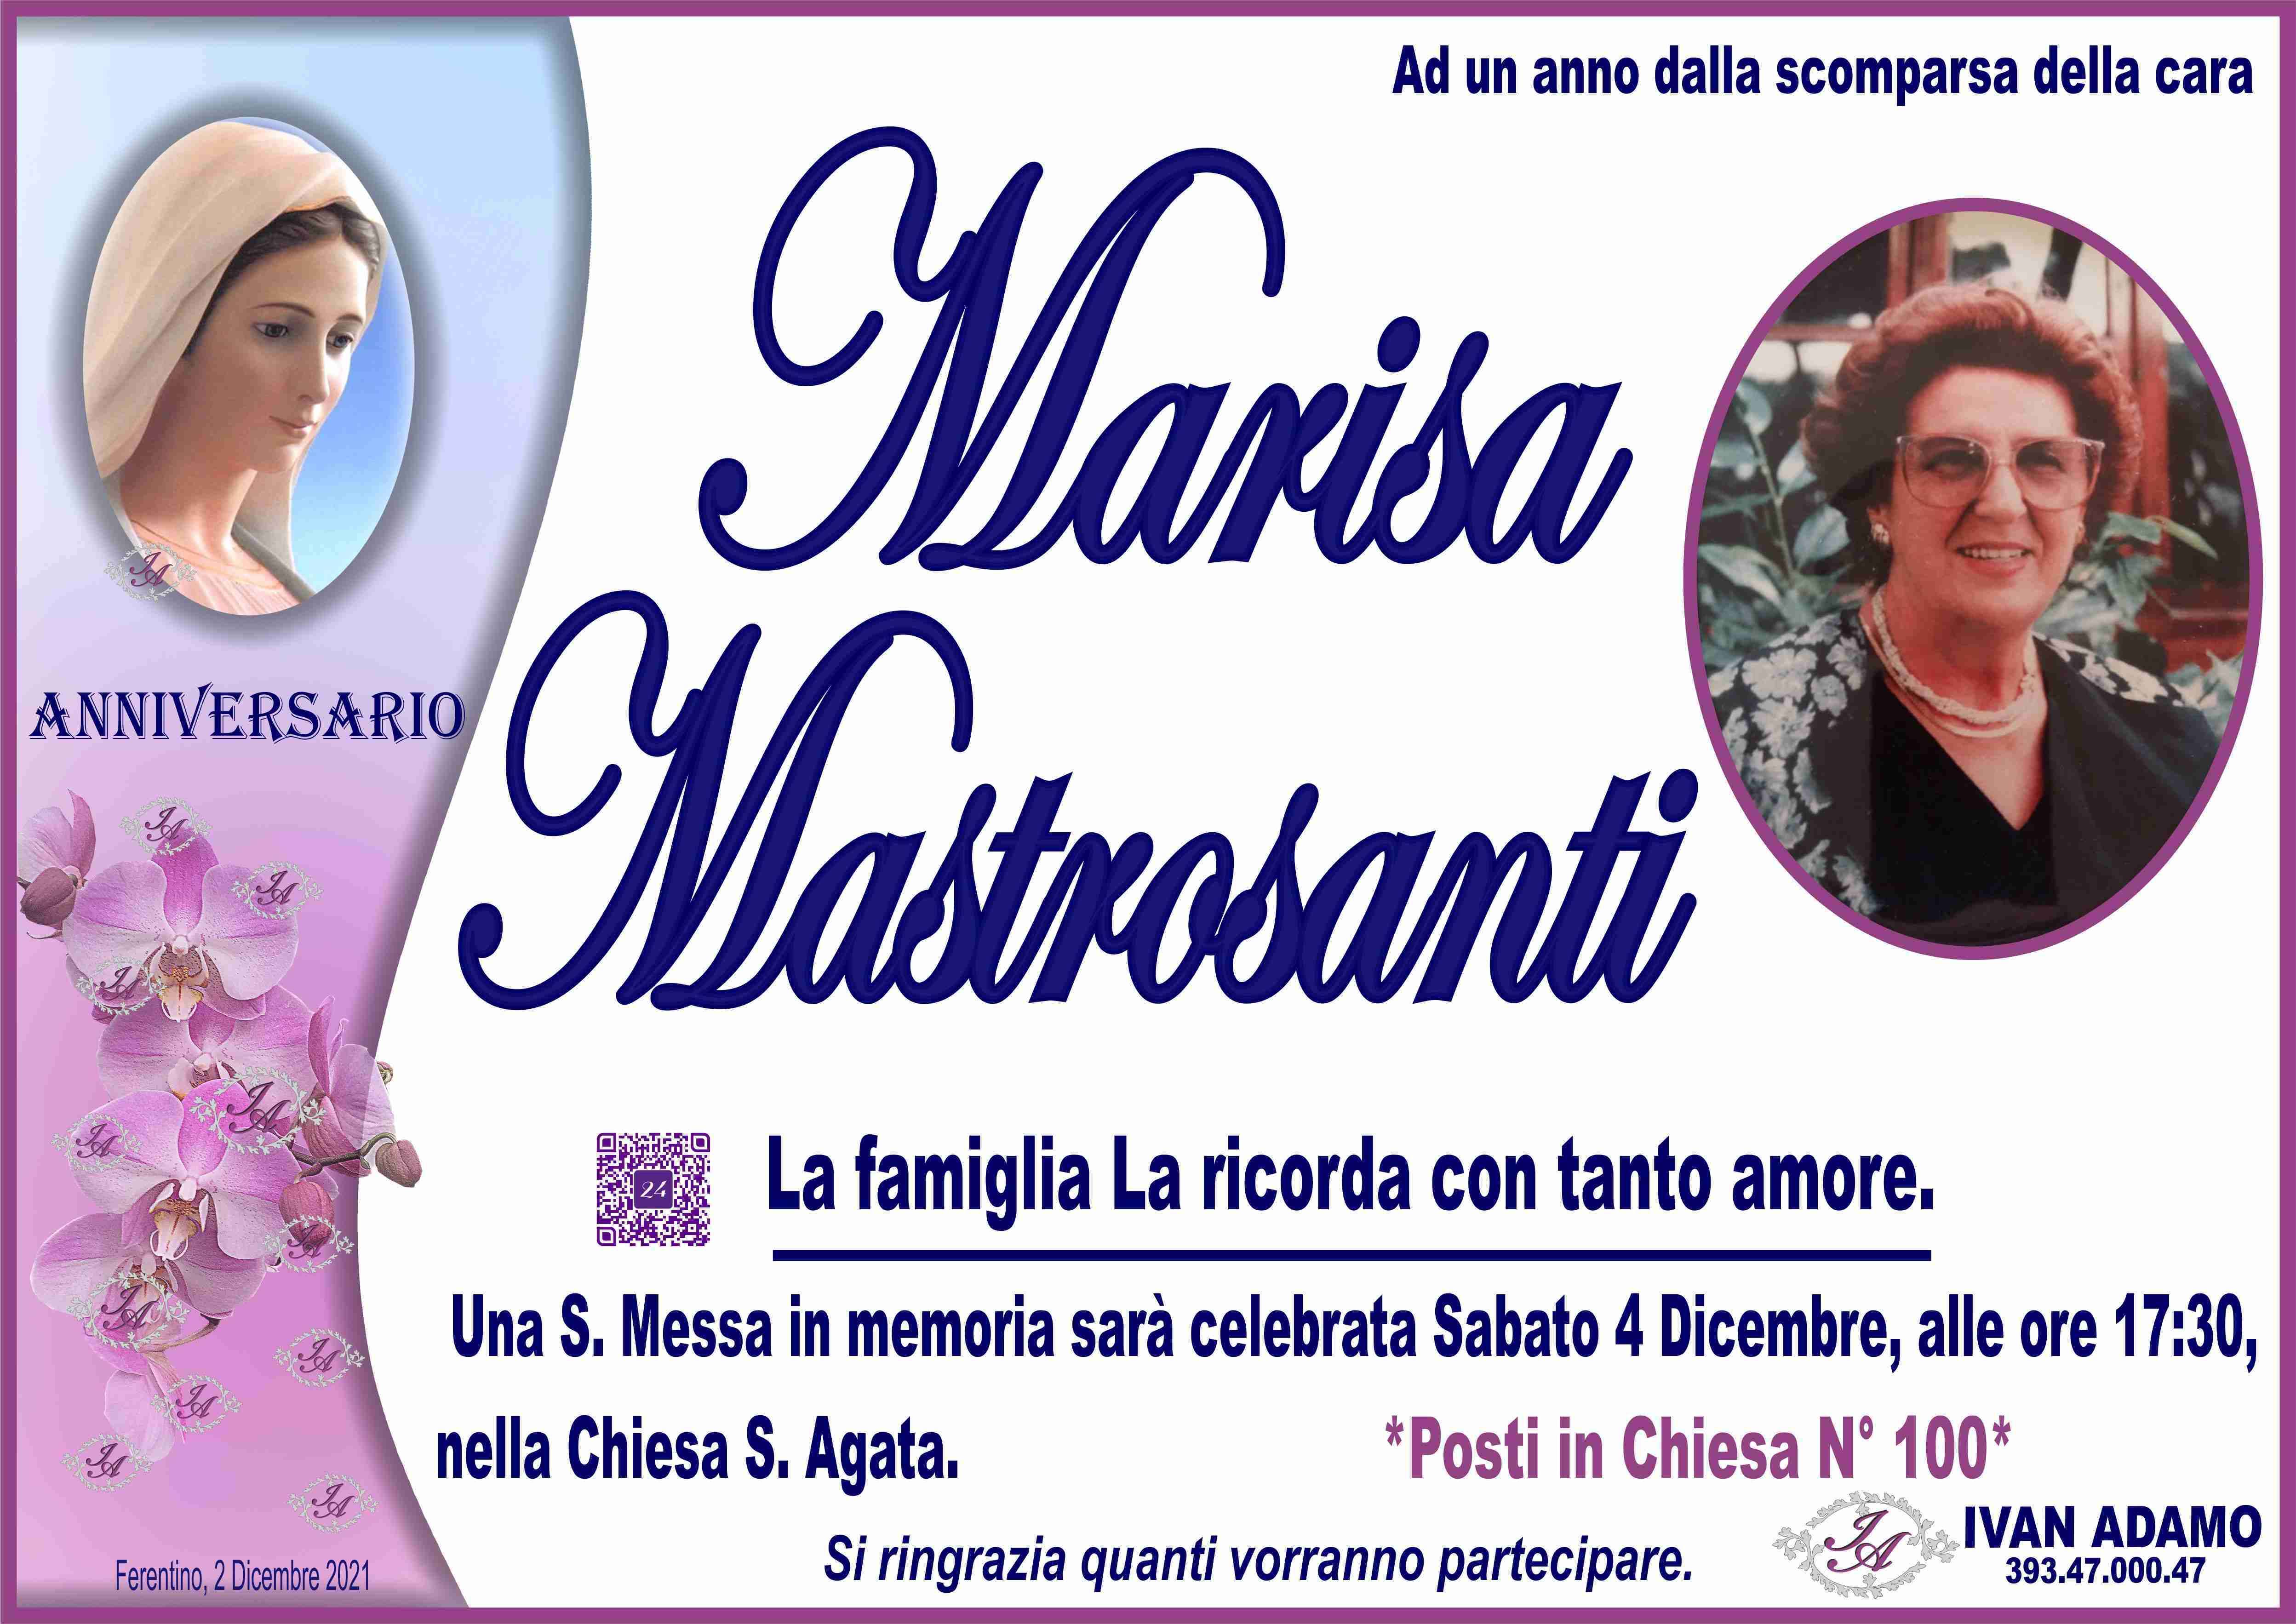 Marisa Mastrosanti